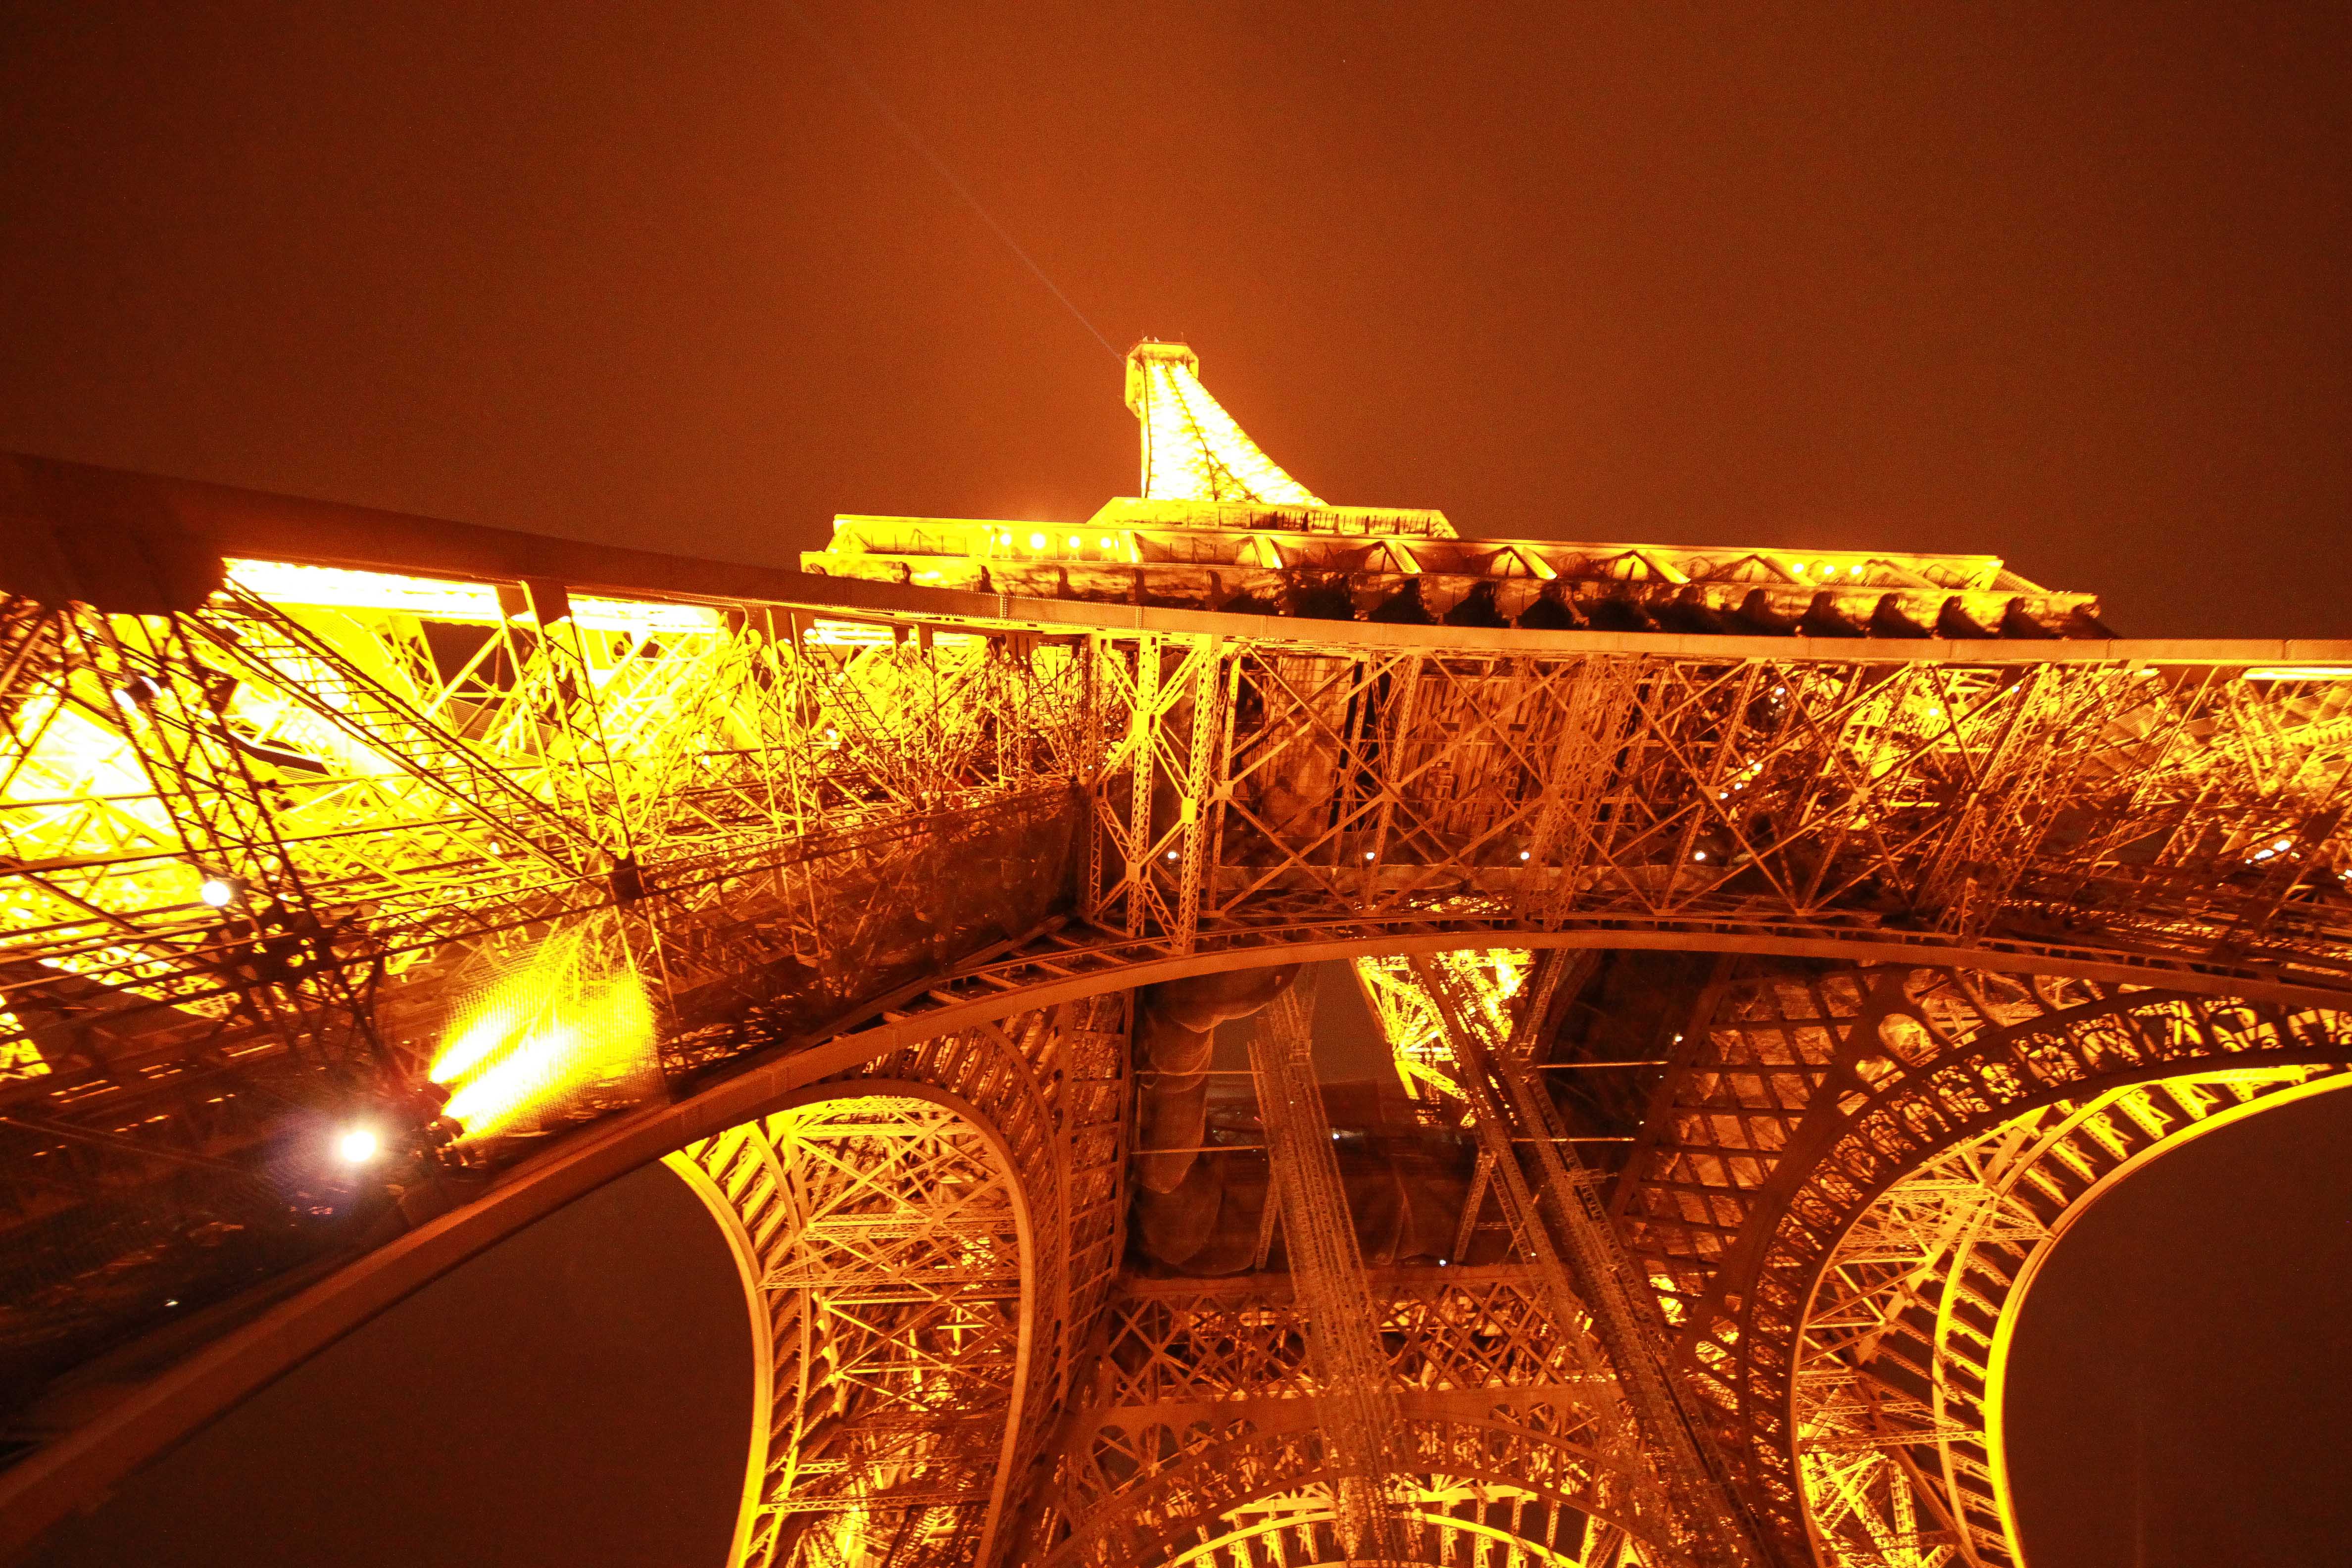 Paris travel: The Eiffel Tower at night